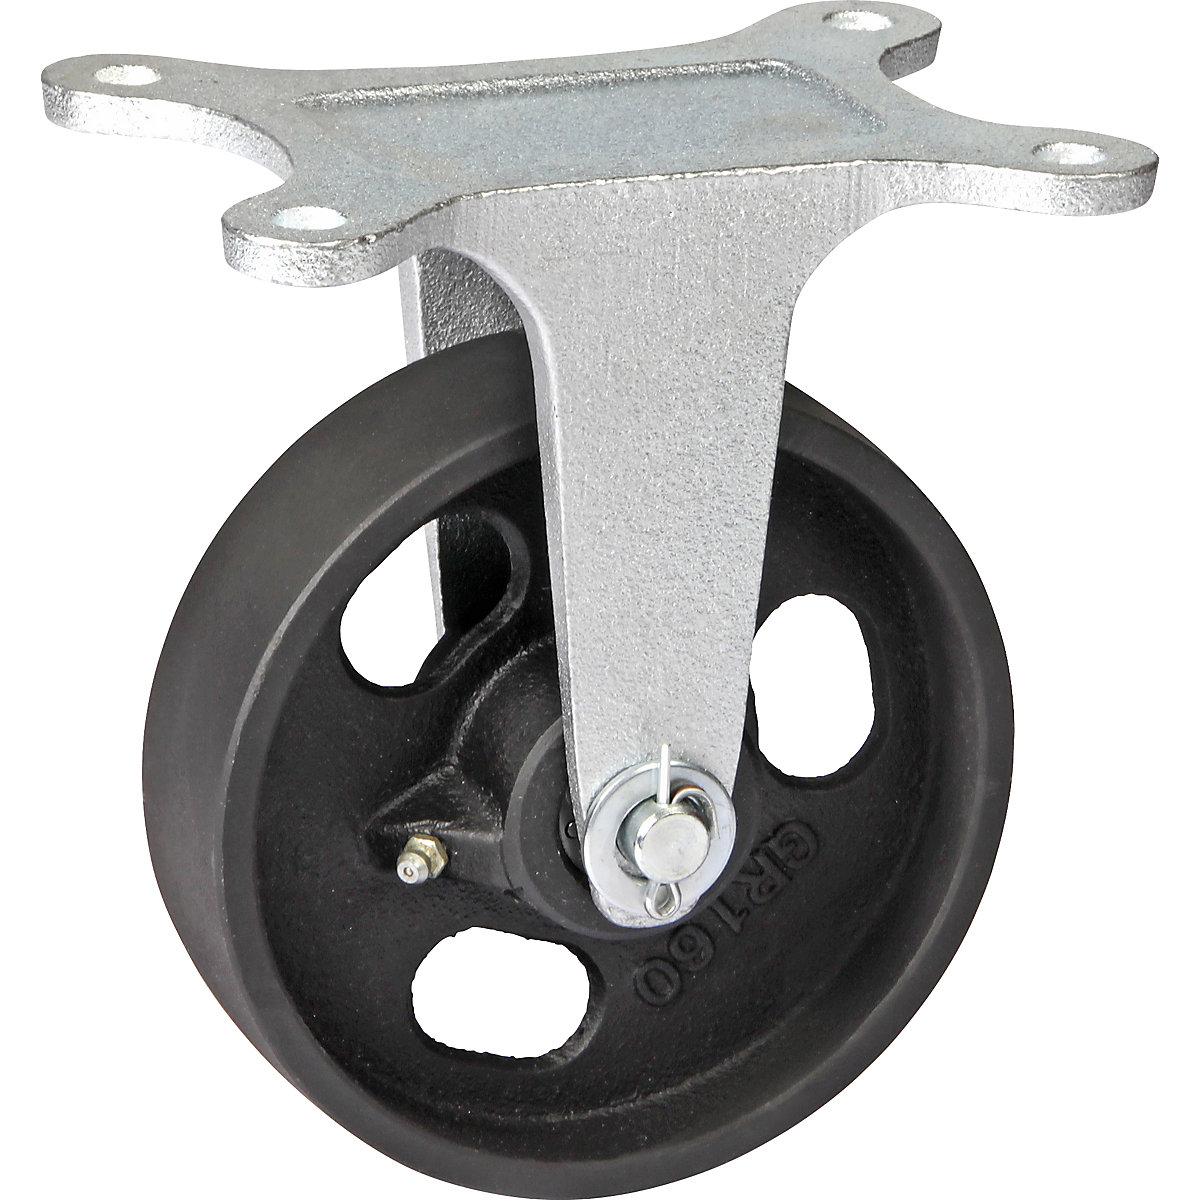 Grey cast iron wheel, annealed cast iron housing